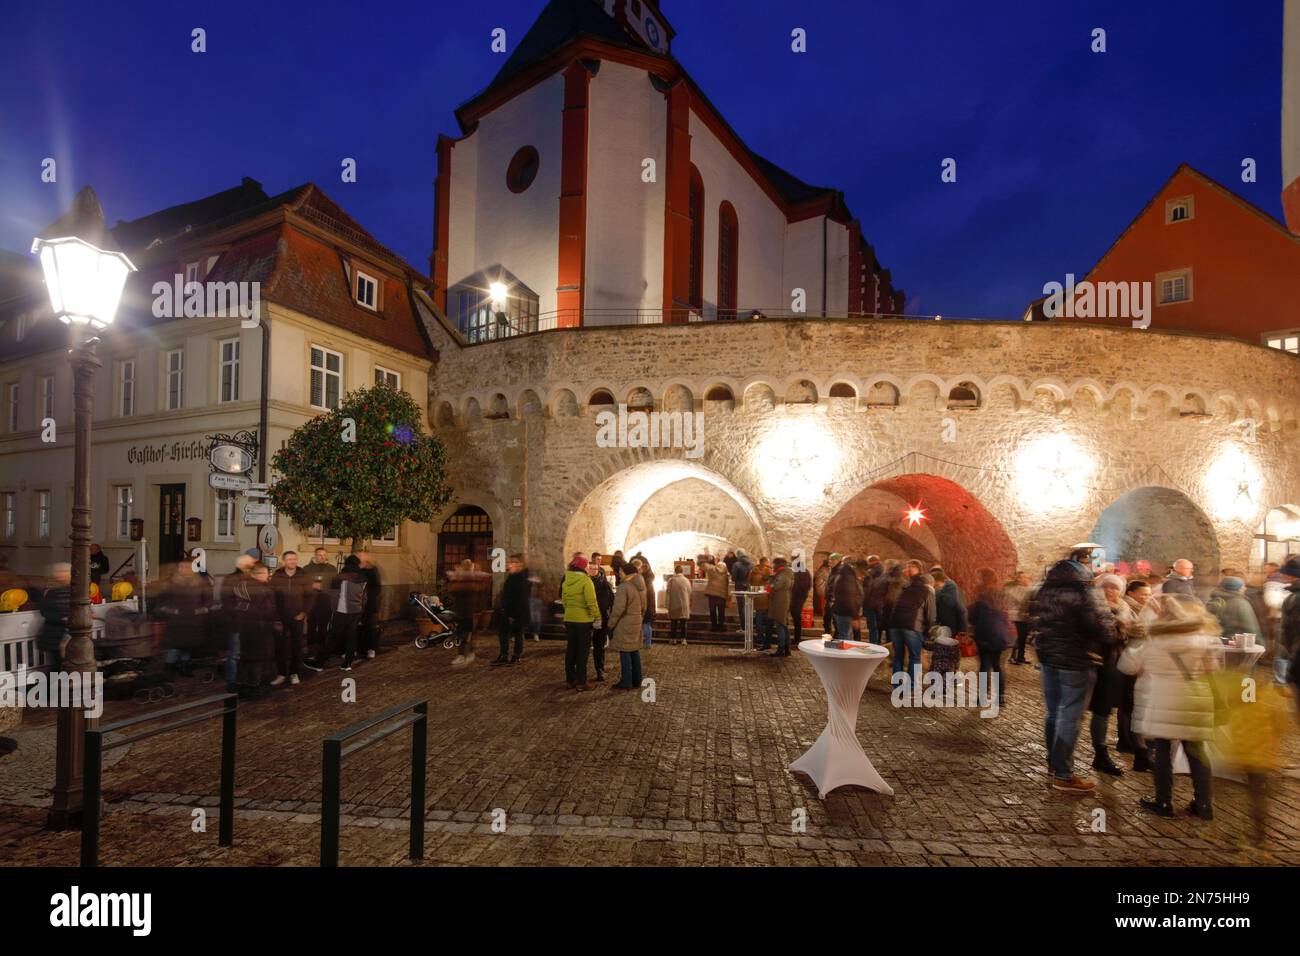 St. Augustine, city parish church, market, Christmas market, Advent, blue hour, Dettelbach, Franconia, Bavaria, Germany, Europe Stock Photo